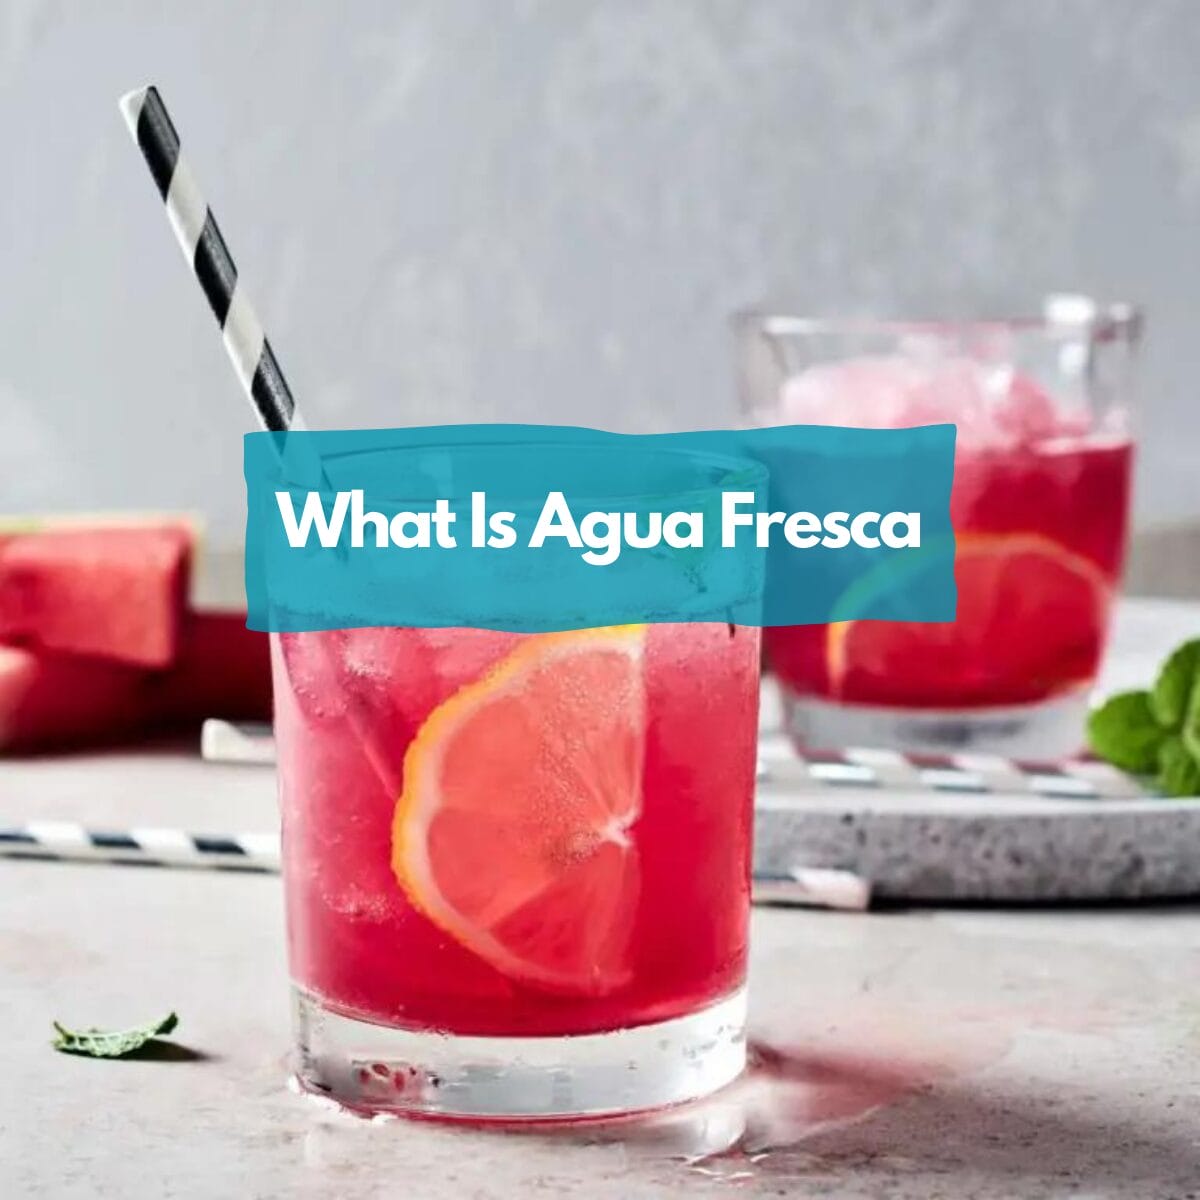 What is agua fresca